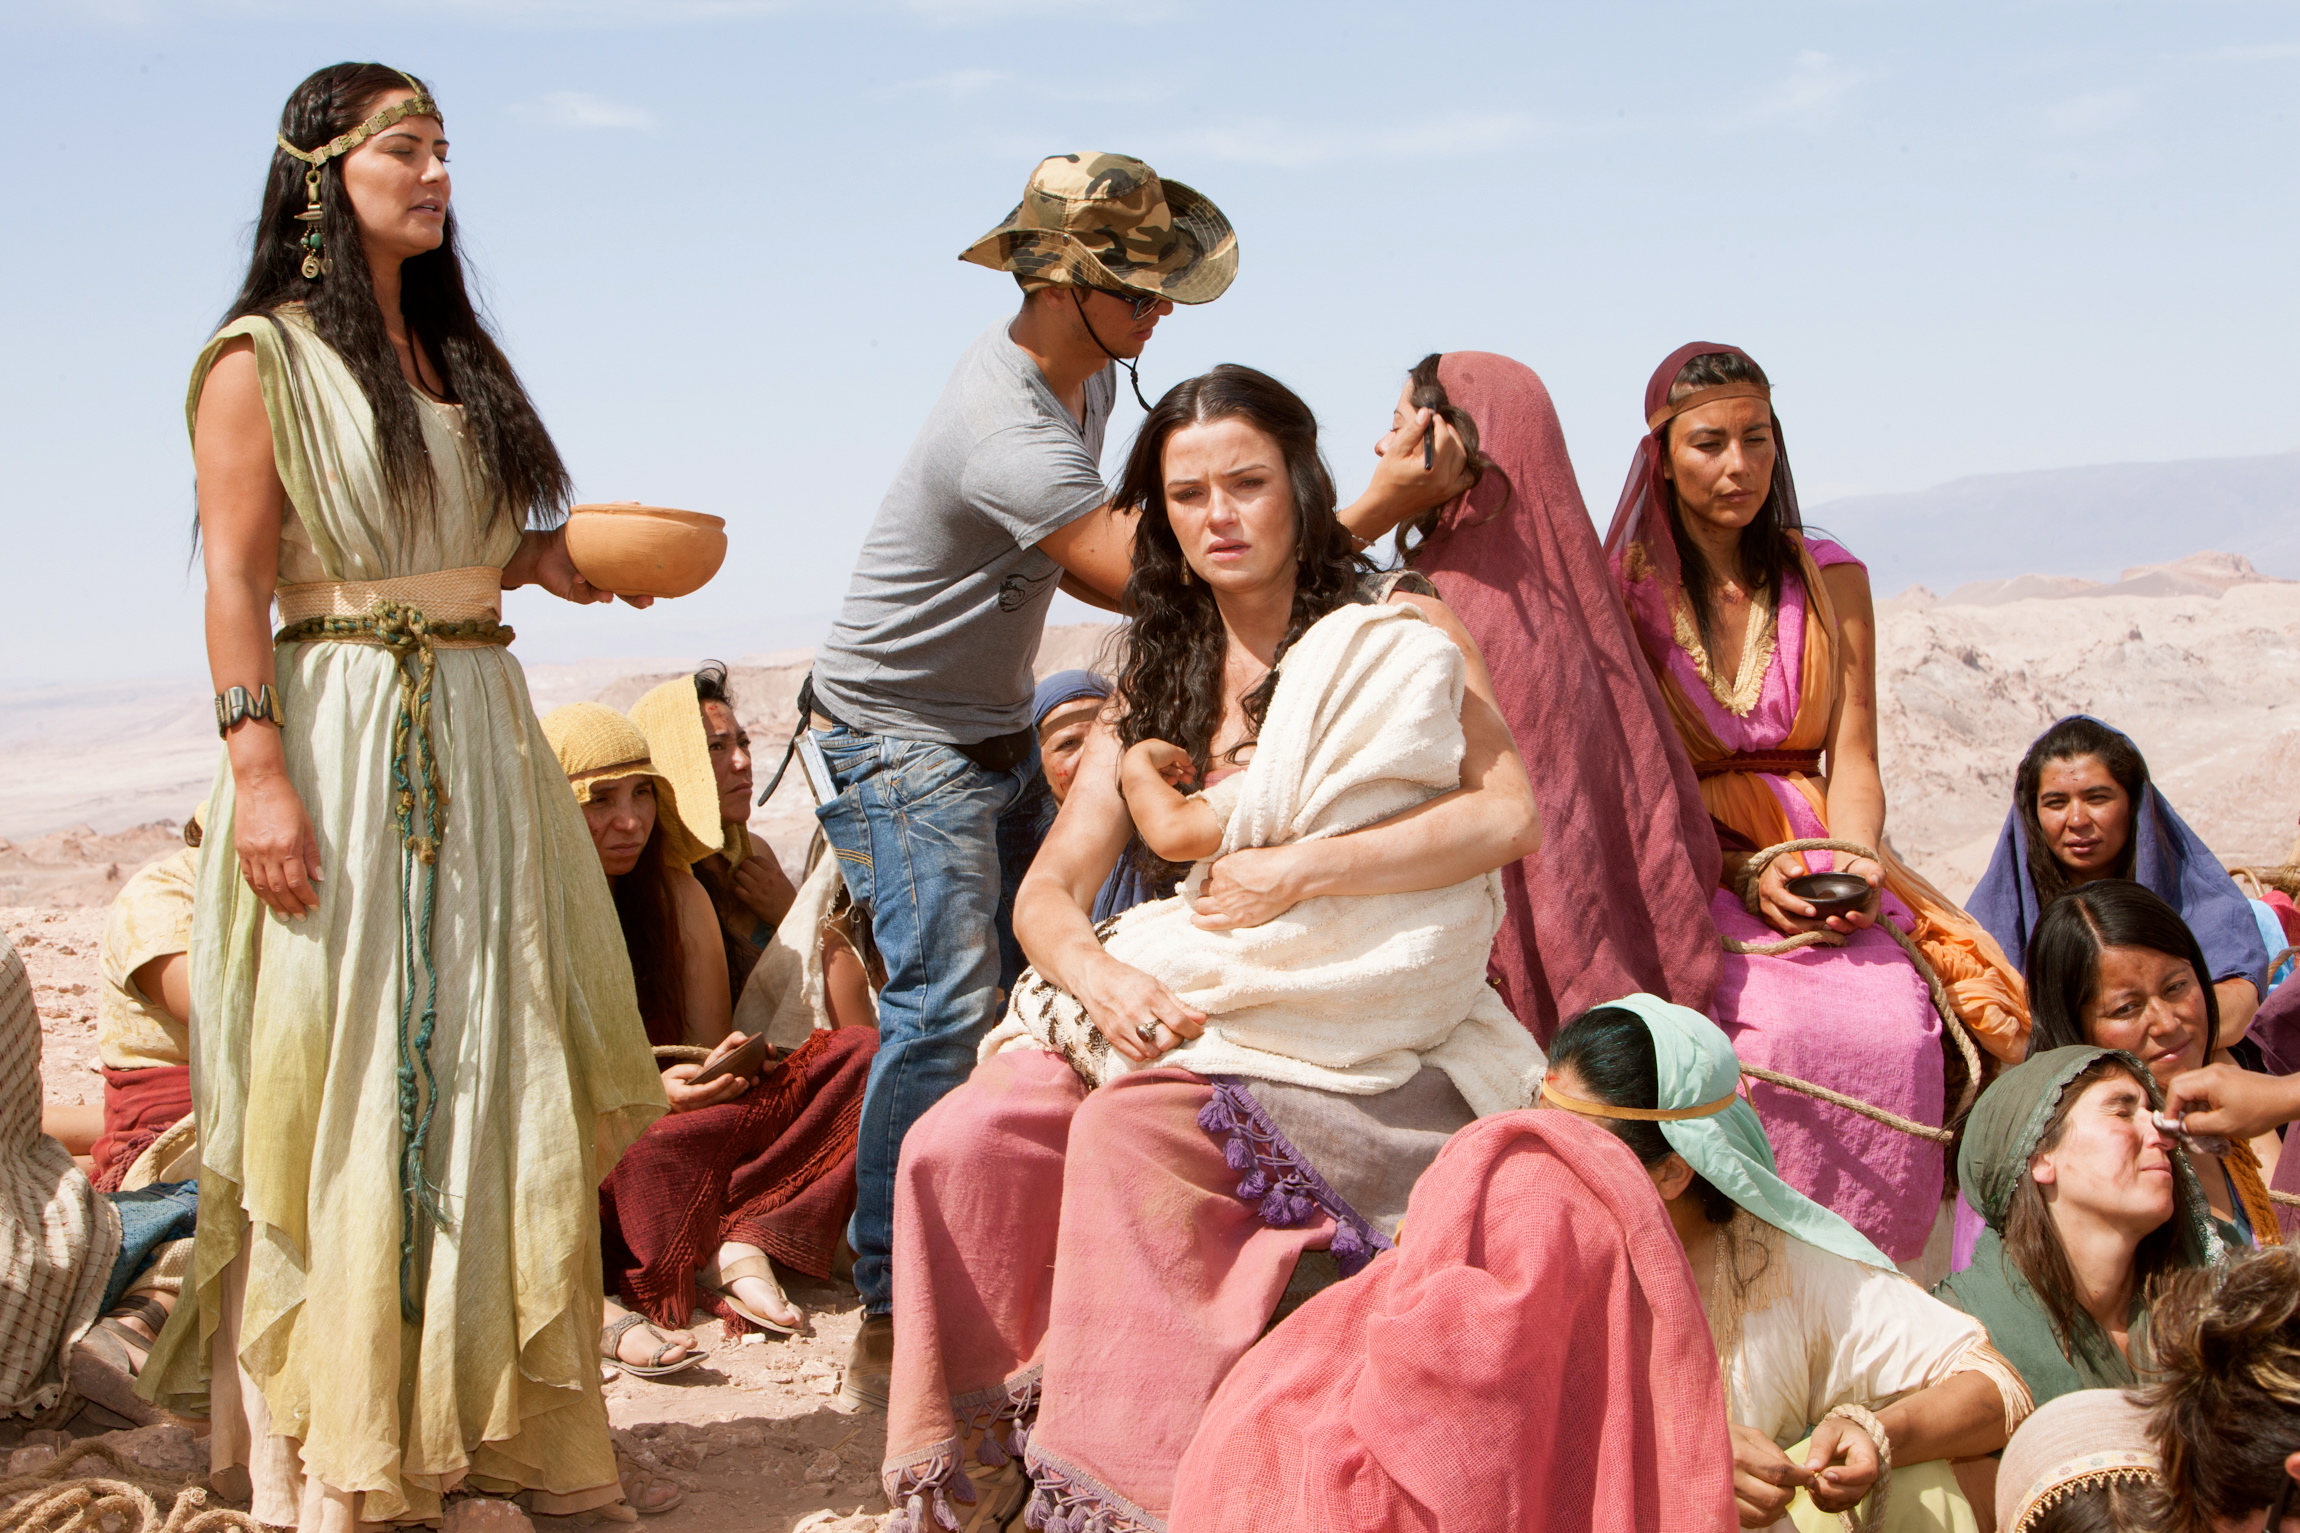 Nanda Ziegler and Carla Regina filming in the Atacama desert, Chile, for José do Egito (TV series 2013).